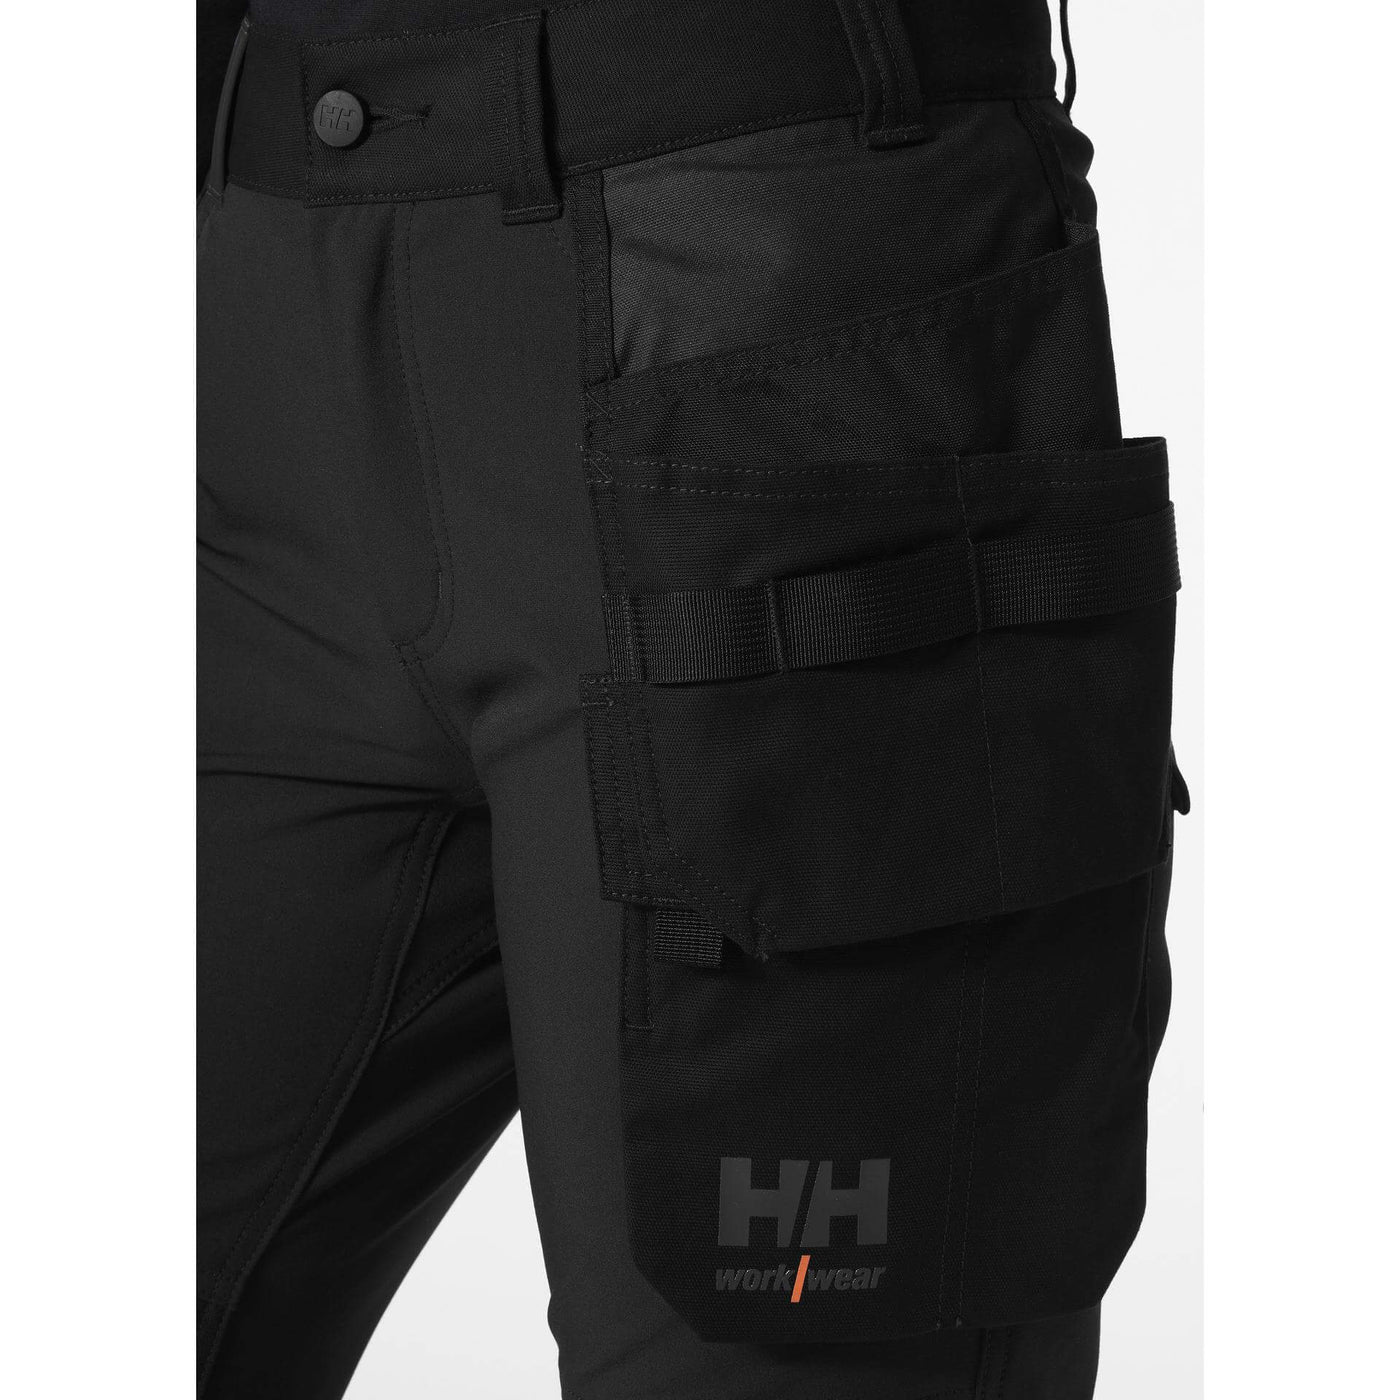 Helly Hansen Luna 4X Womens 4-Way-Stretch Construction Trousers Black Feature 2#colour_black